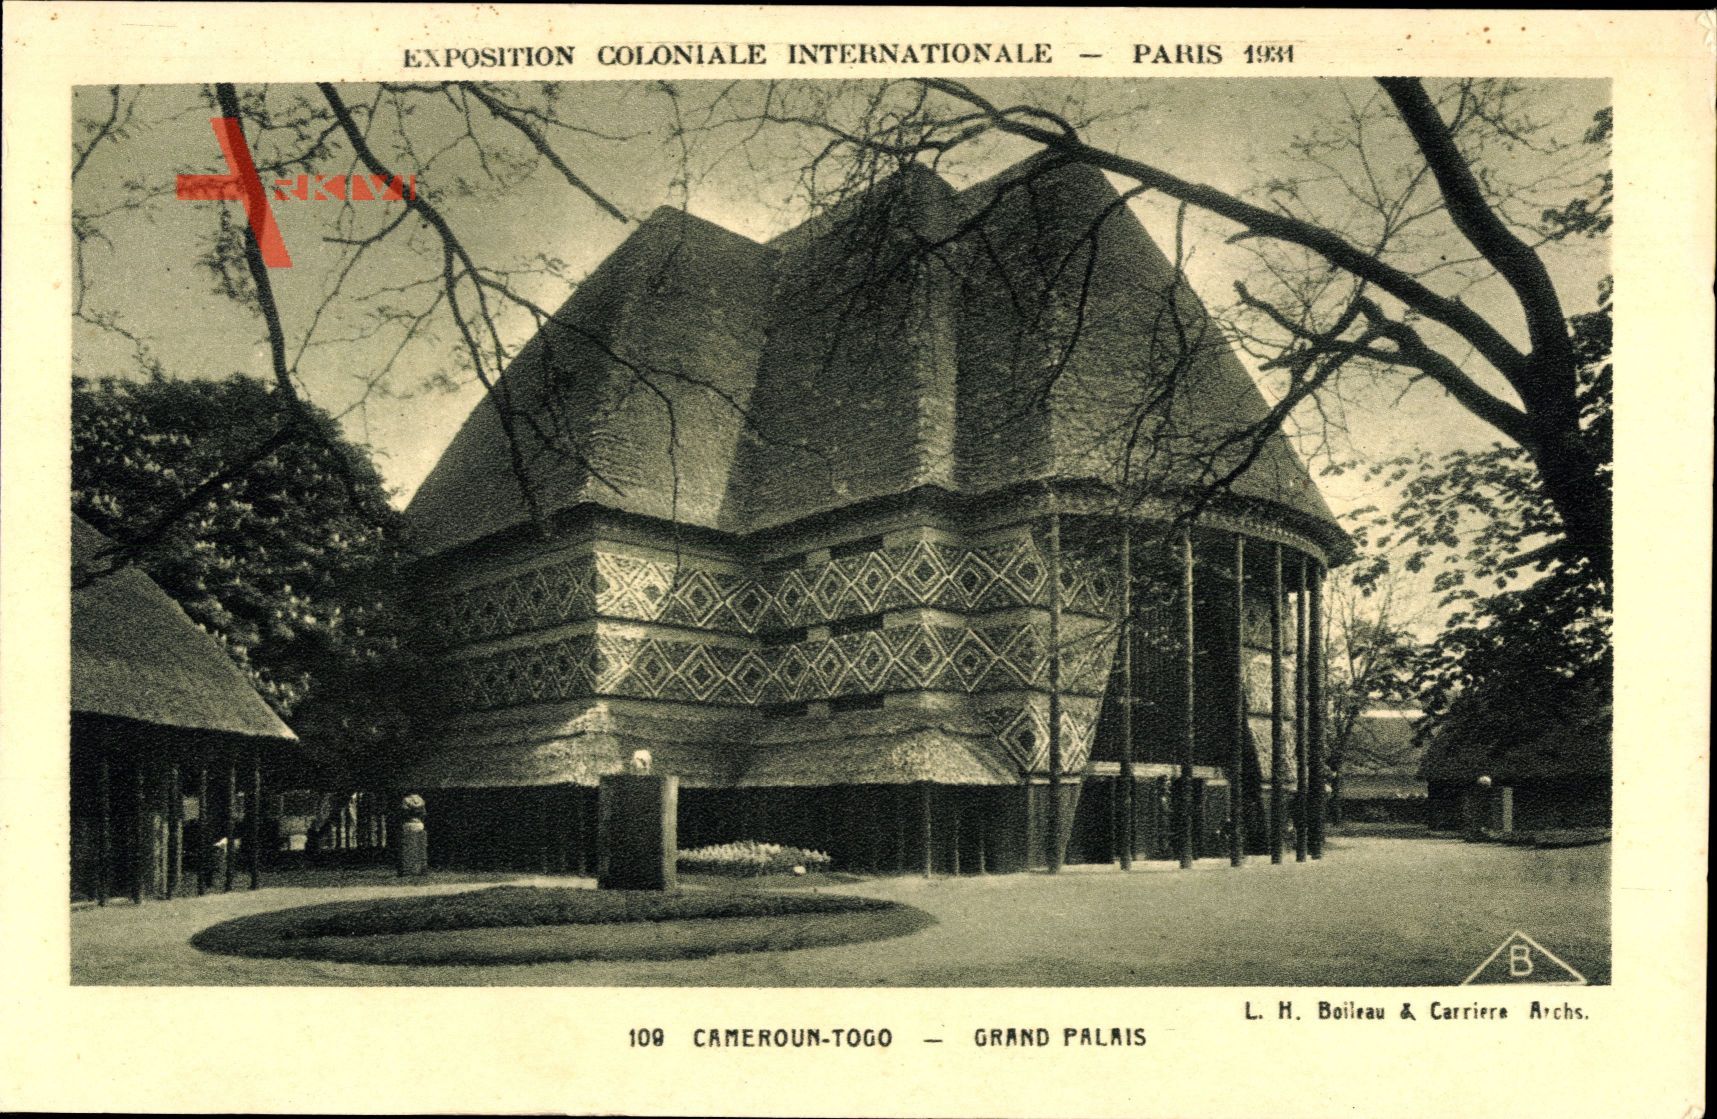 Paris, Expo Coloniale, Weltausstellung 1931, Cameroun Togo